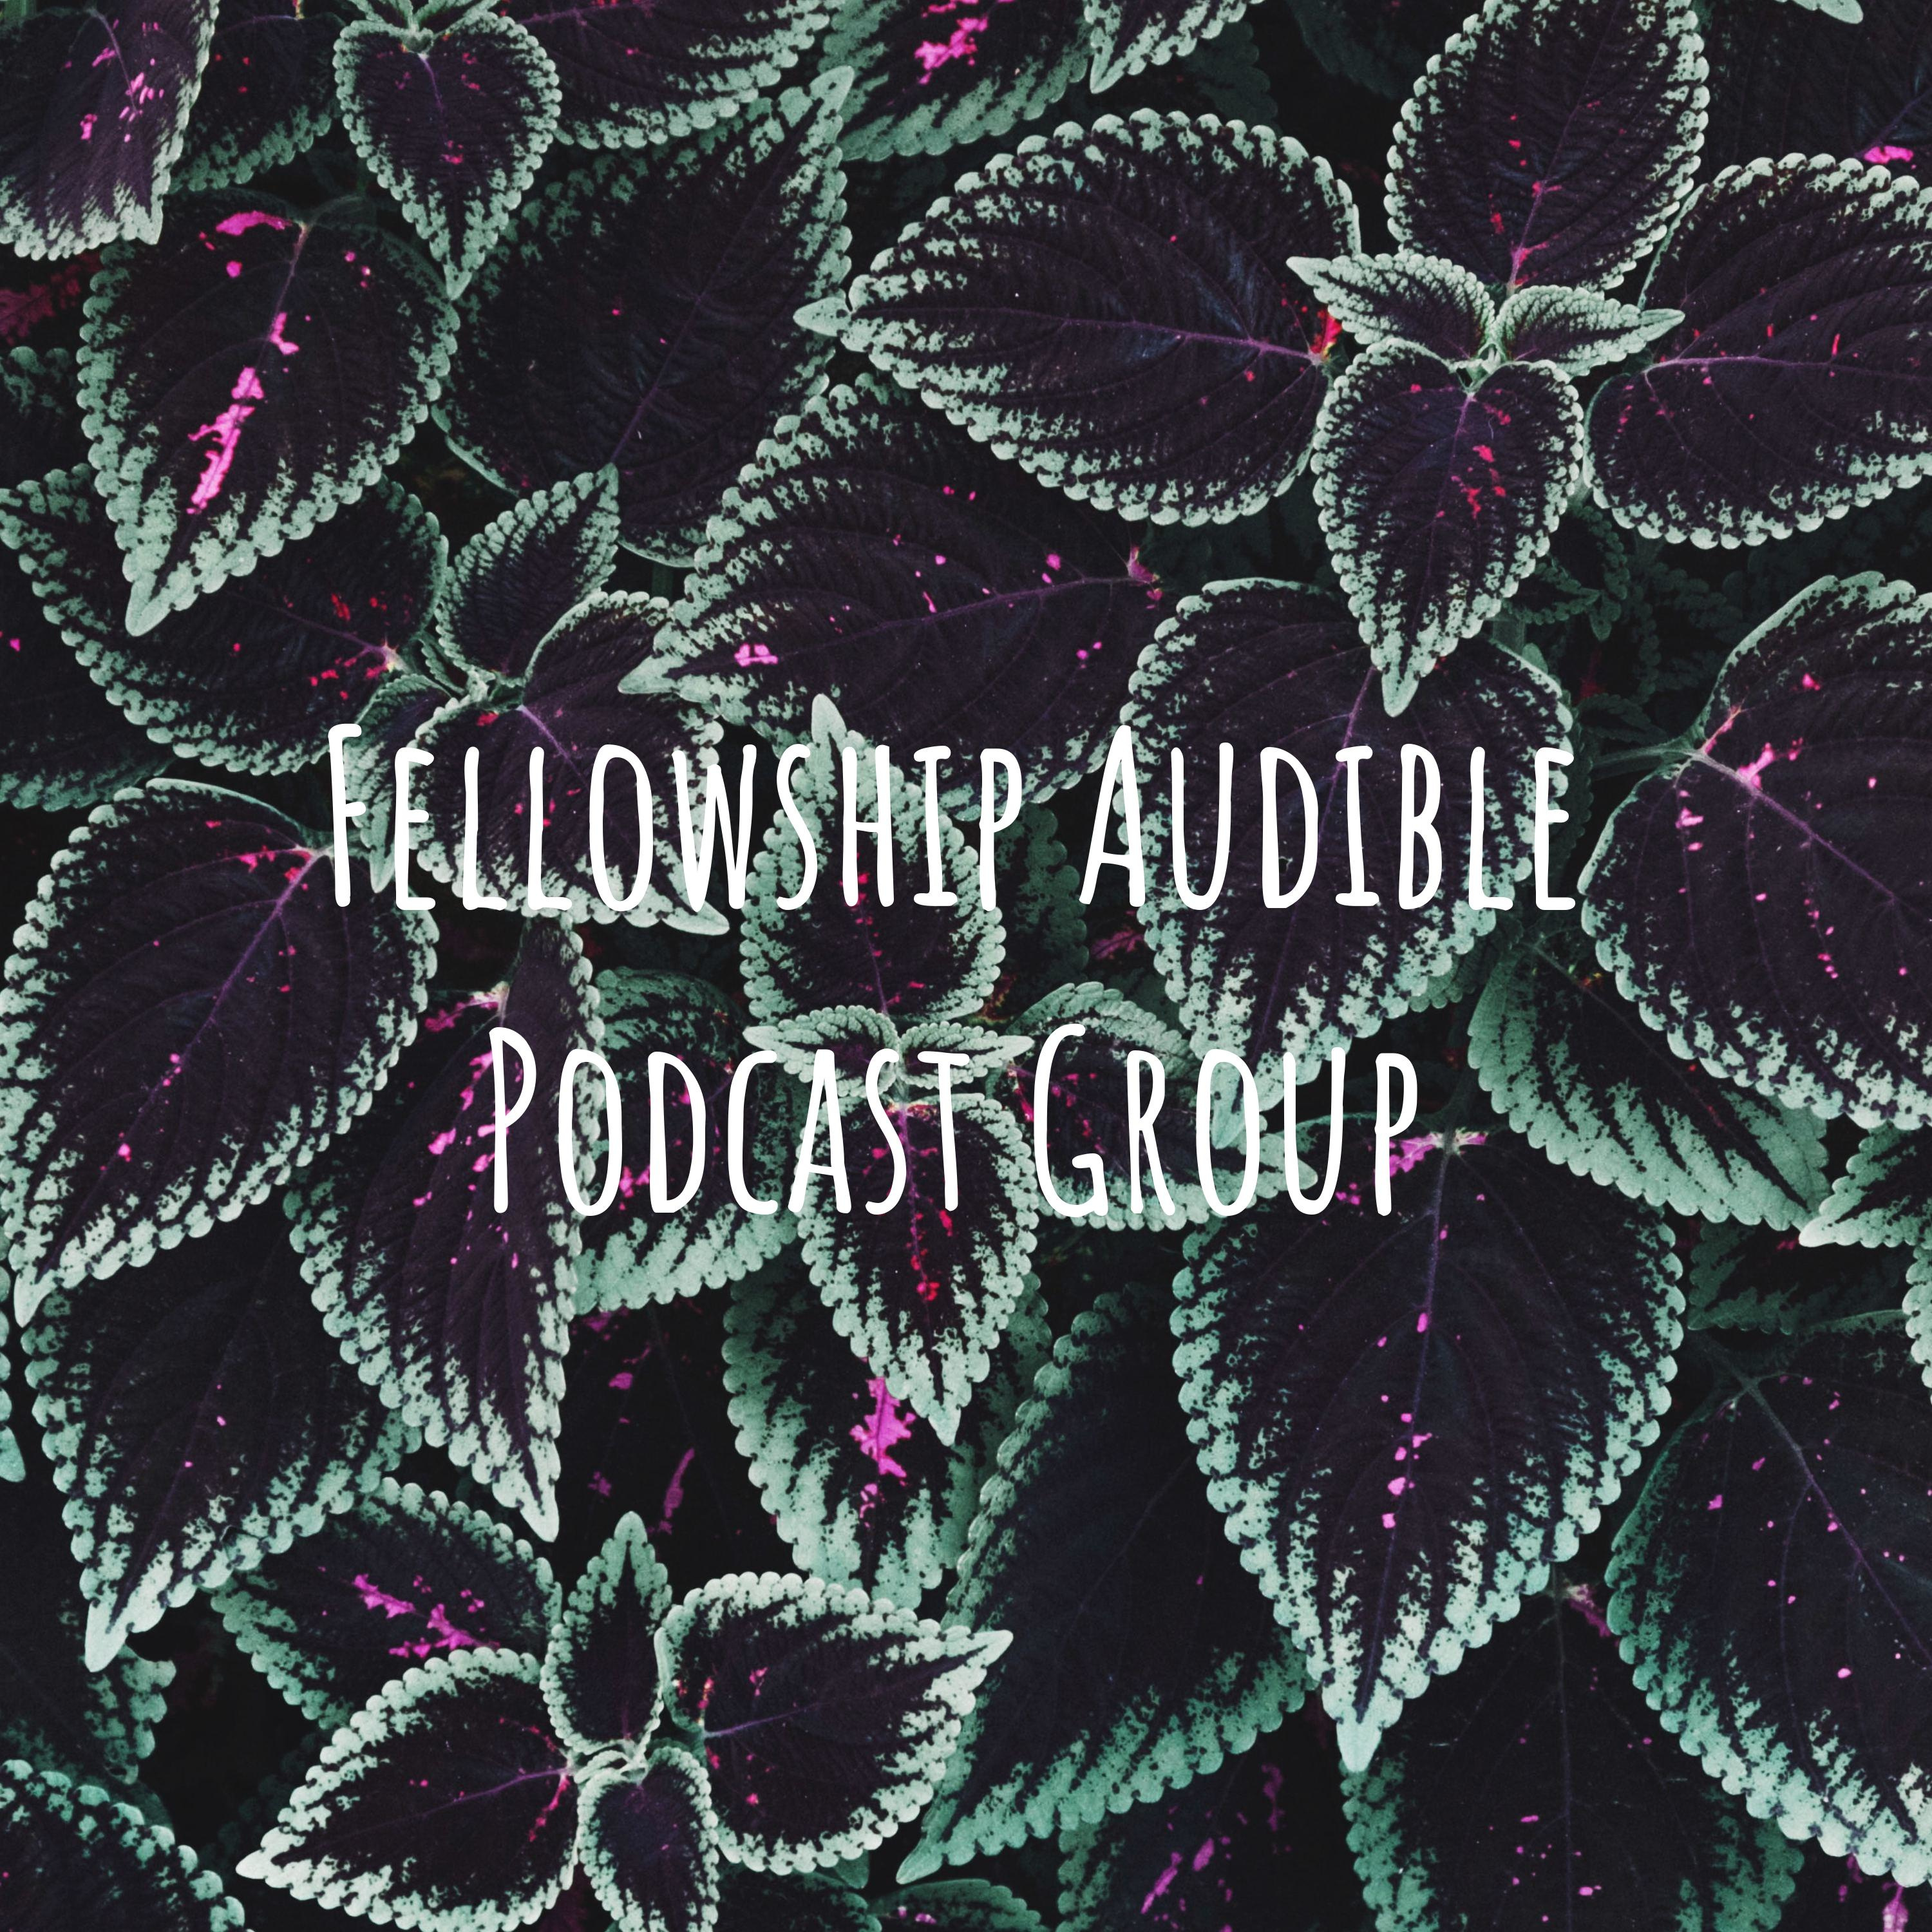 Fellowship Audio Podcast 11MAY19 | Random conversations